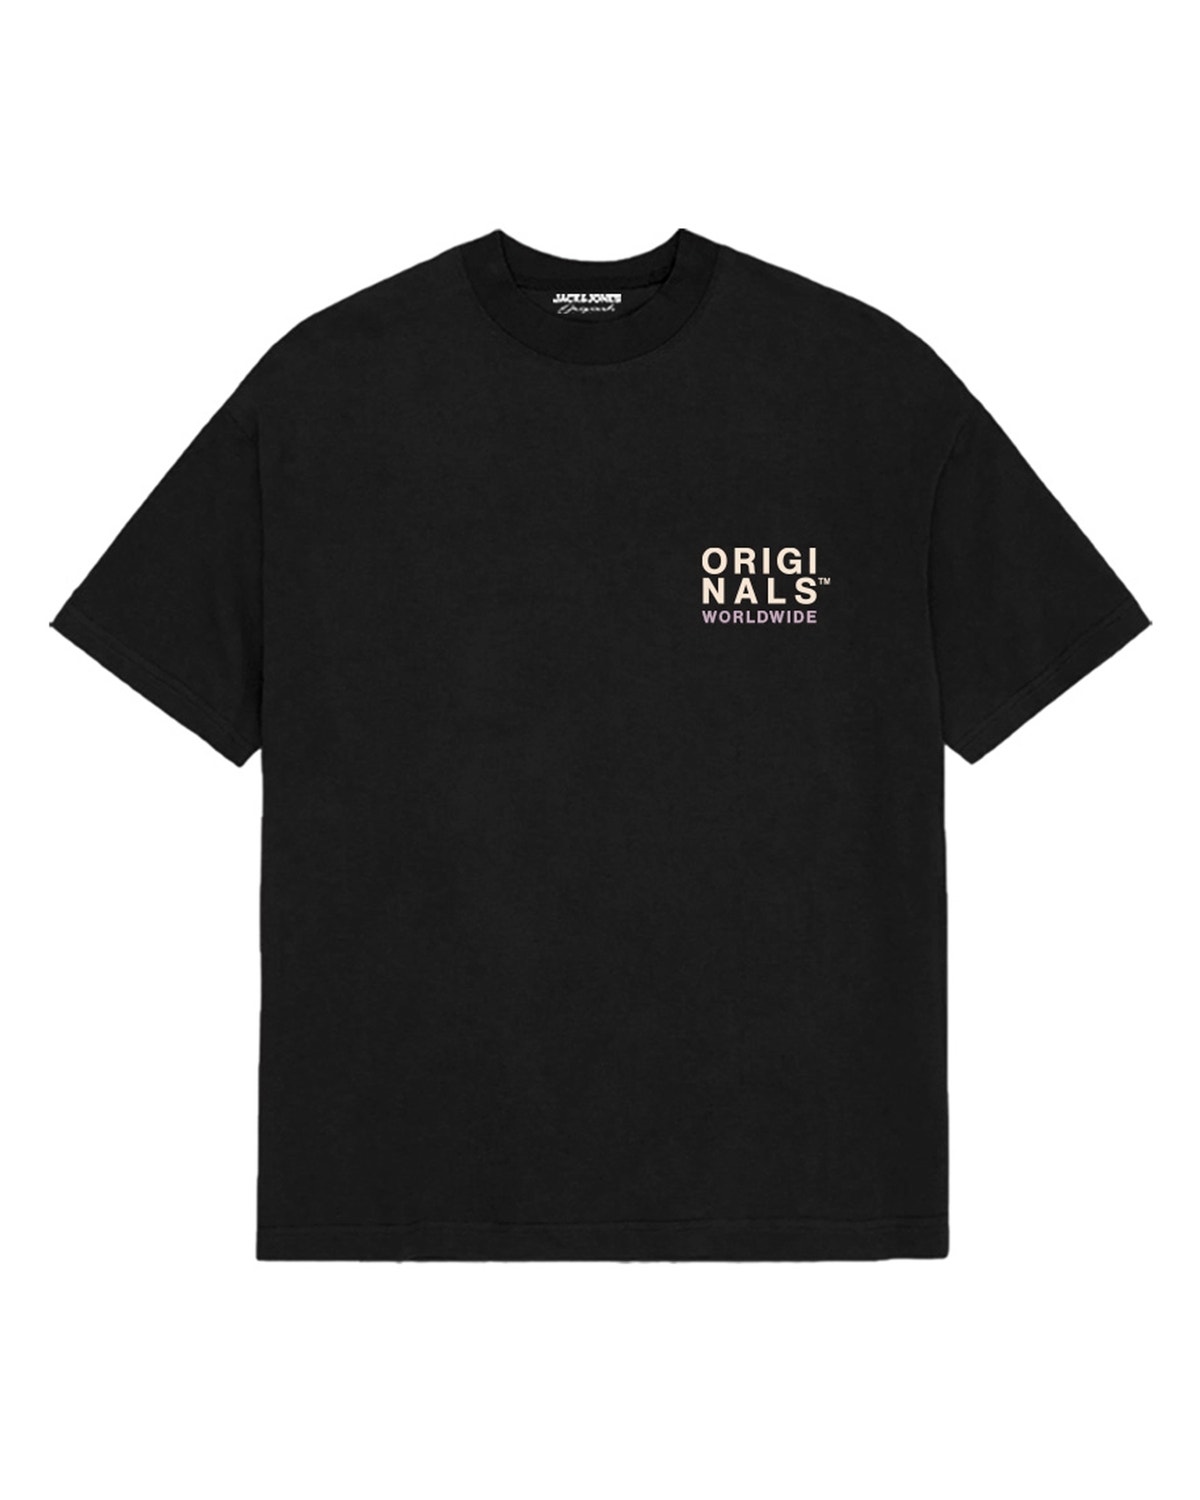 Jack & Jones Printed Crew neck T-shirt -Black - 12255080